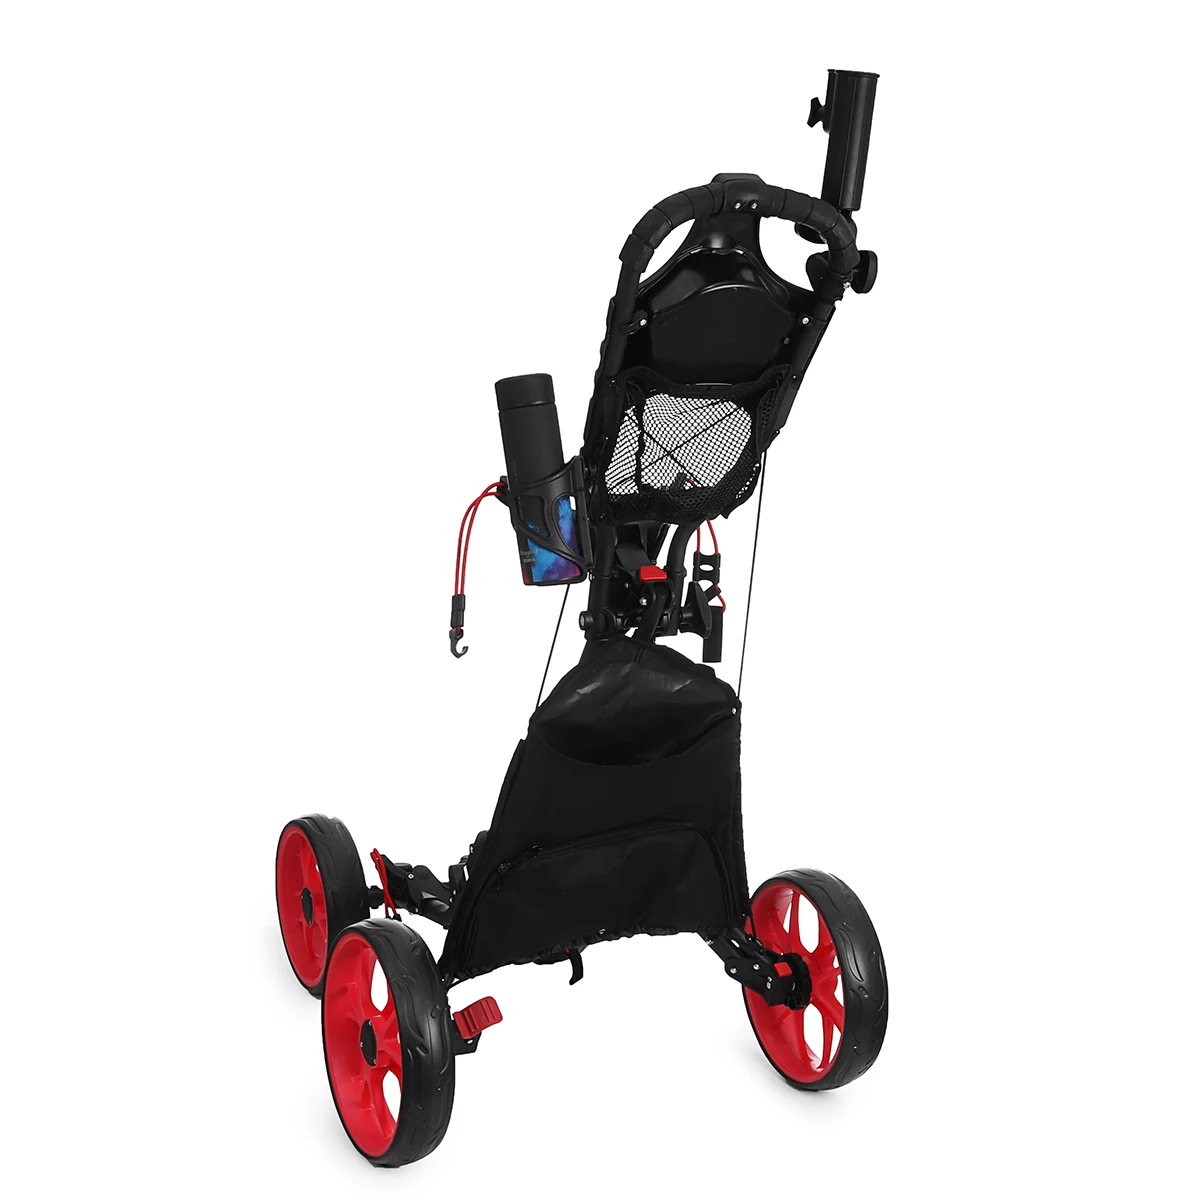 Folding Aluminum Alloy Golf Trolley Pull Push Cart Umbrella Cup Holder Adjustable Trolley With Footbrake